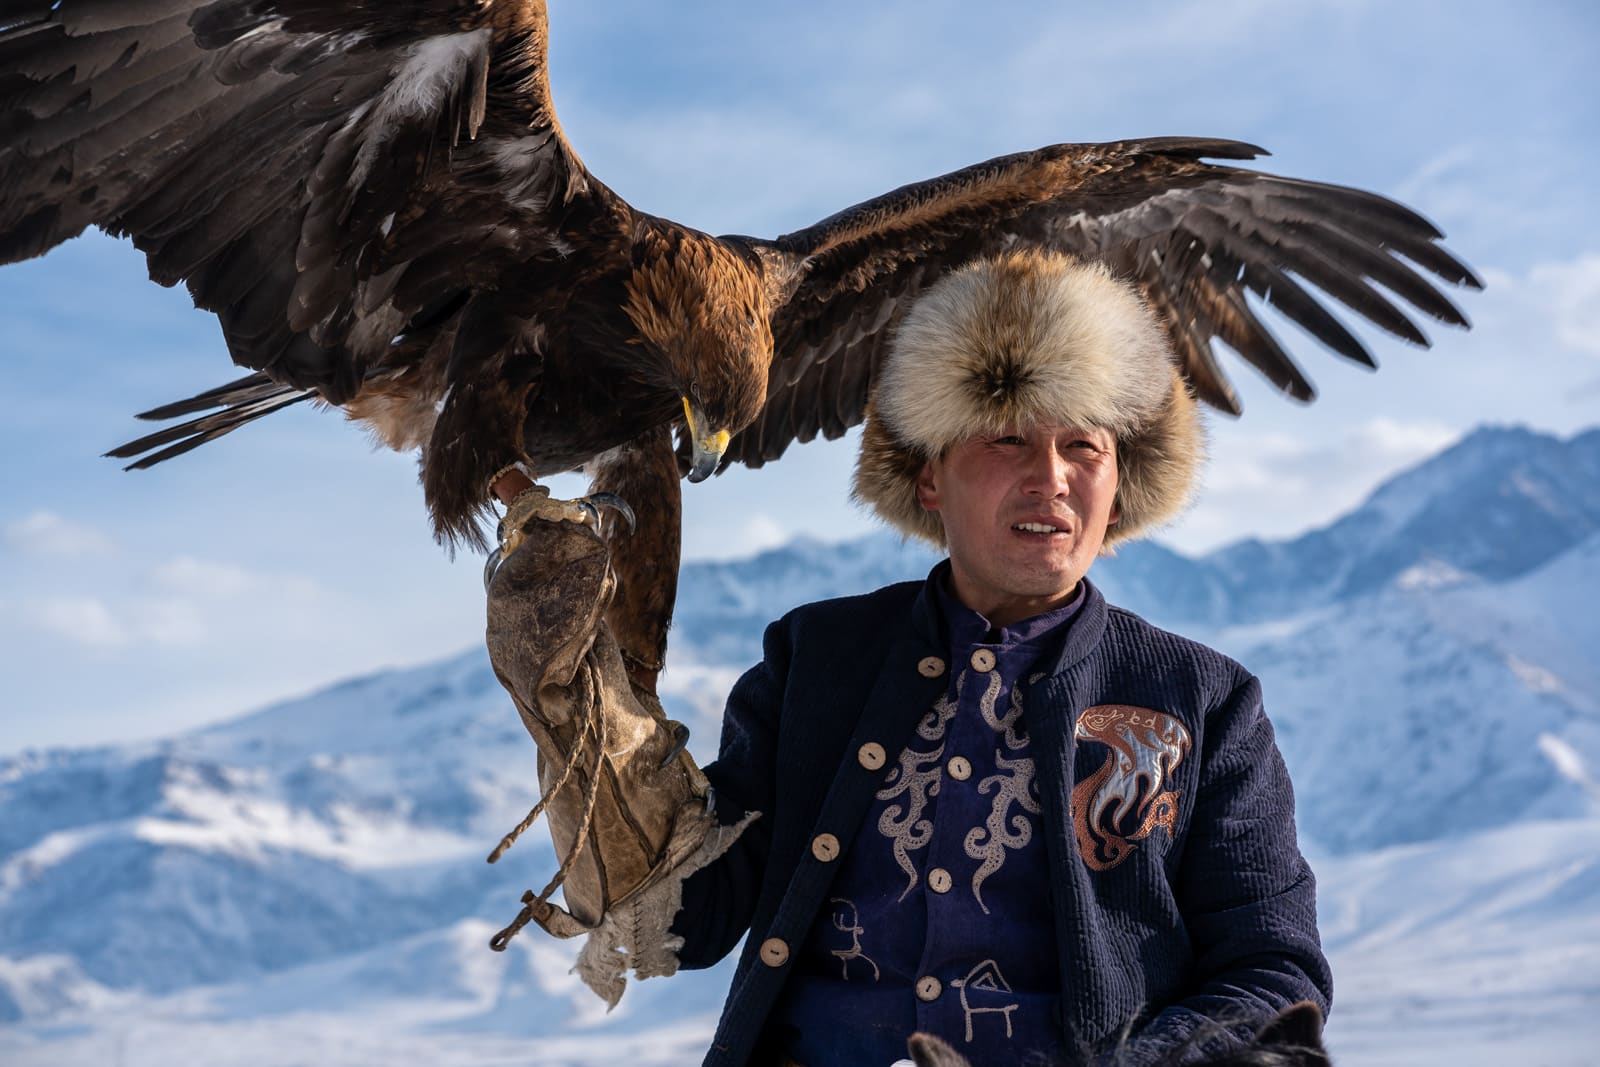 Salburuun eagle hunter in Jaichy, Kyrgyzstan